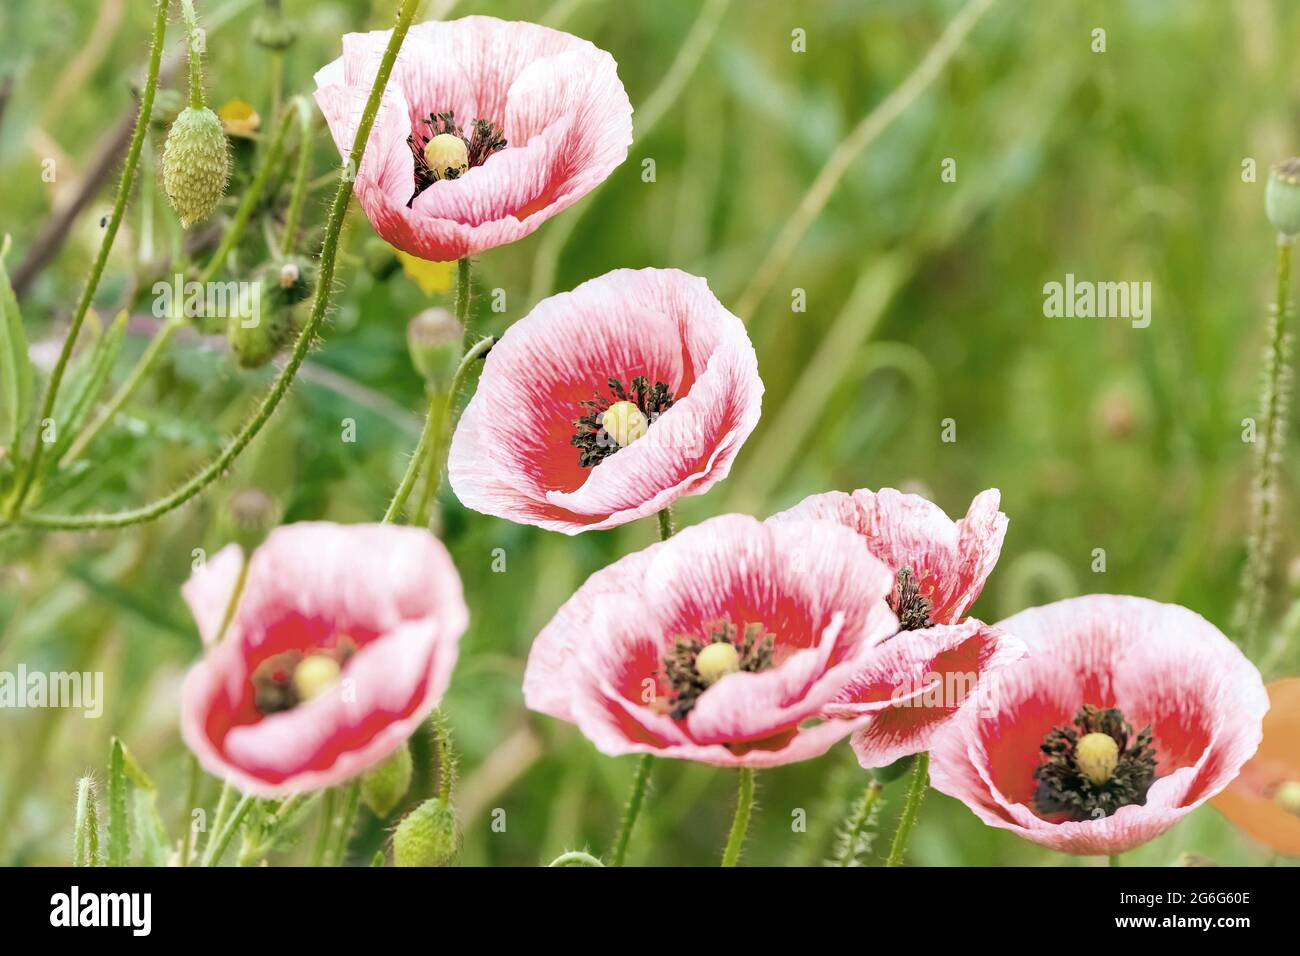 Common poppy, Corn poppy, Red poppy (Papaver rhoeas), red and white poppy flowers, Germany Stock Photo